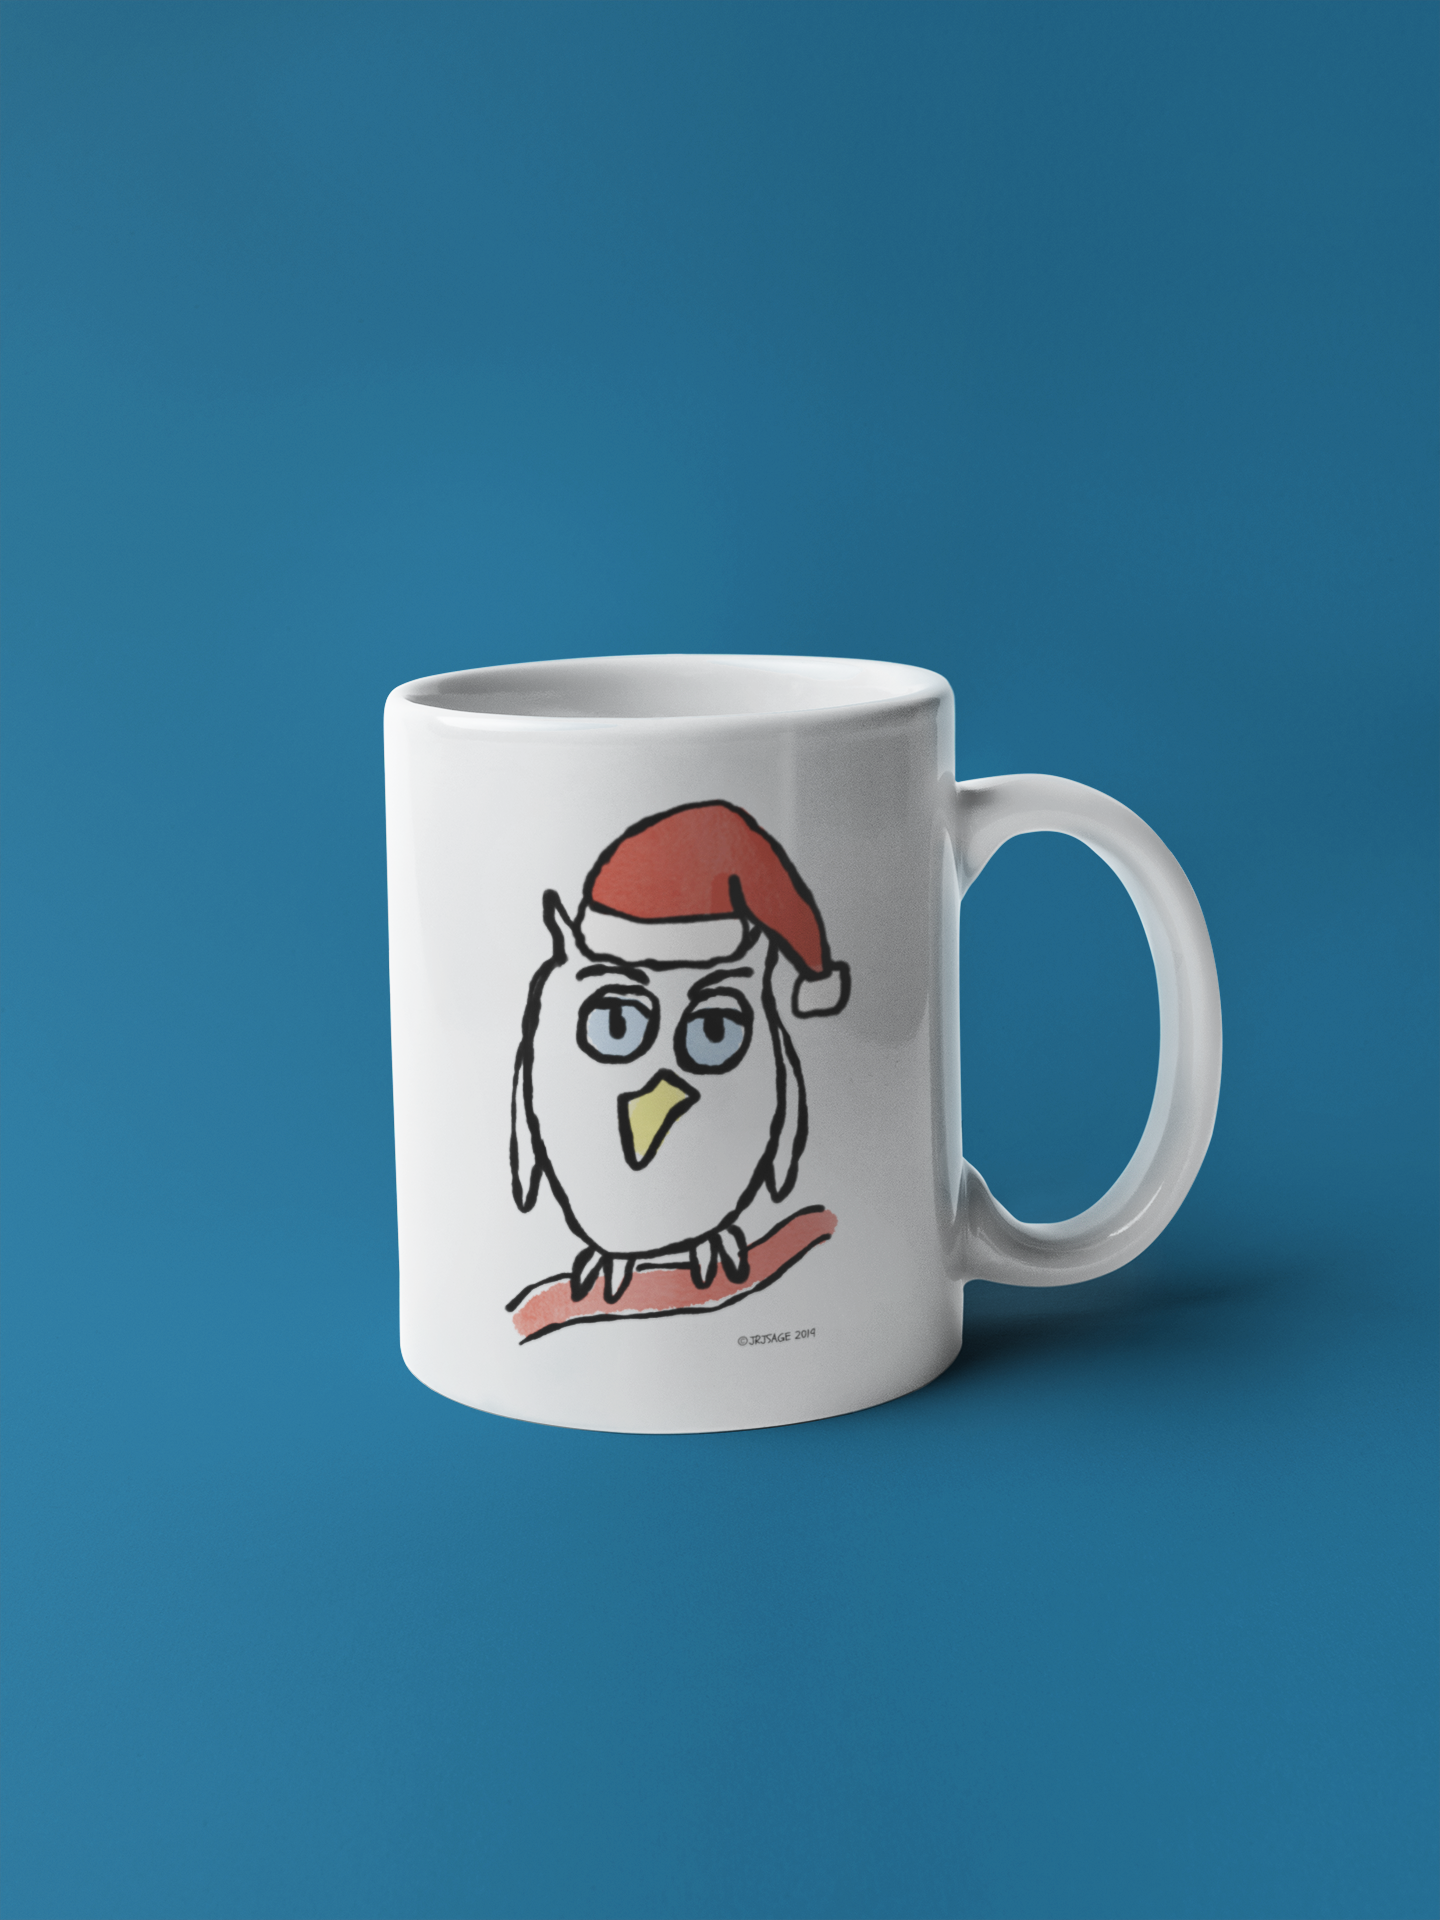 Santa Night Owl Christmas coffee mug design by Hector and Bone cute animal wearing Xmas hat